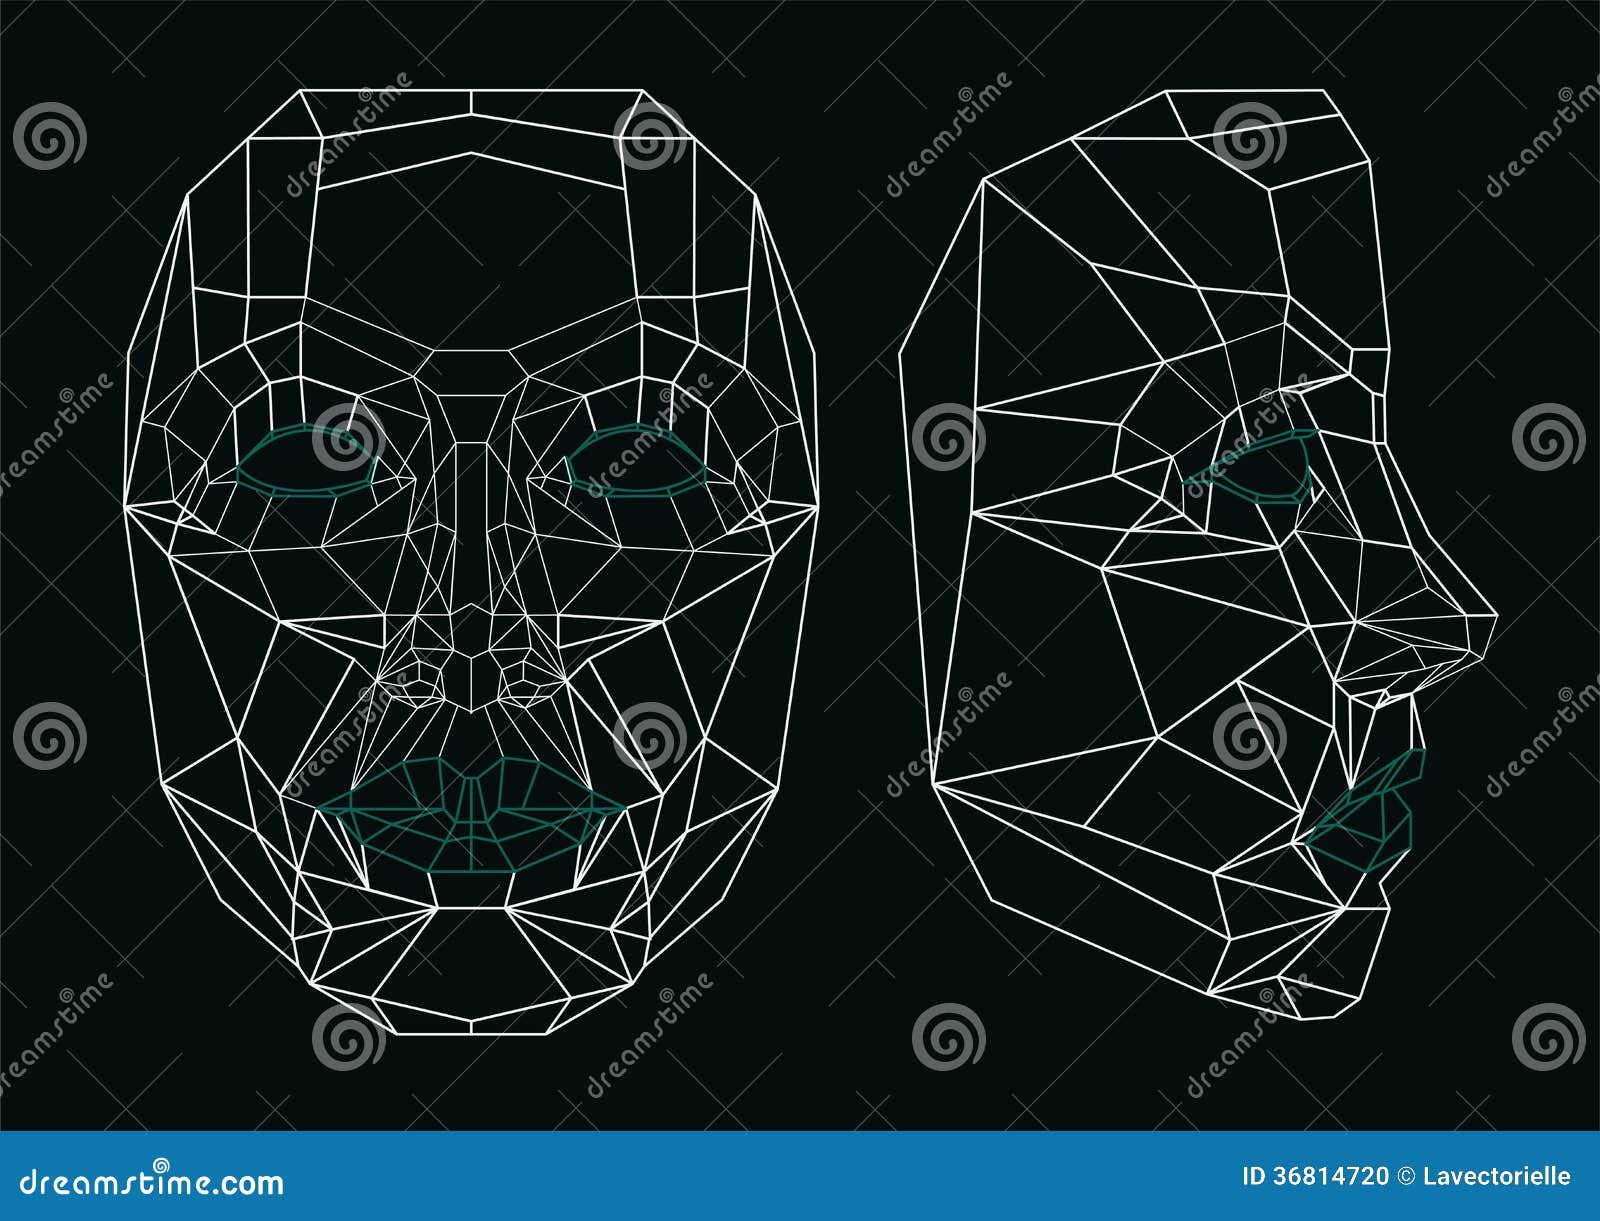 half robot face drawing